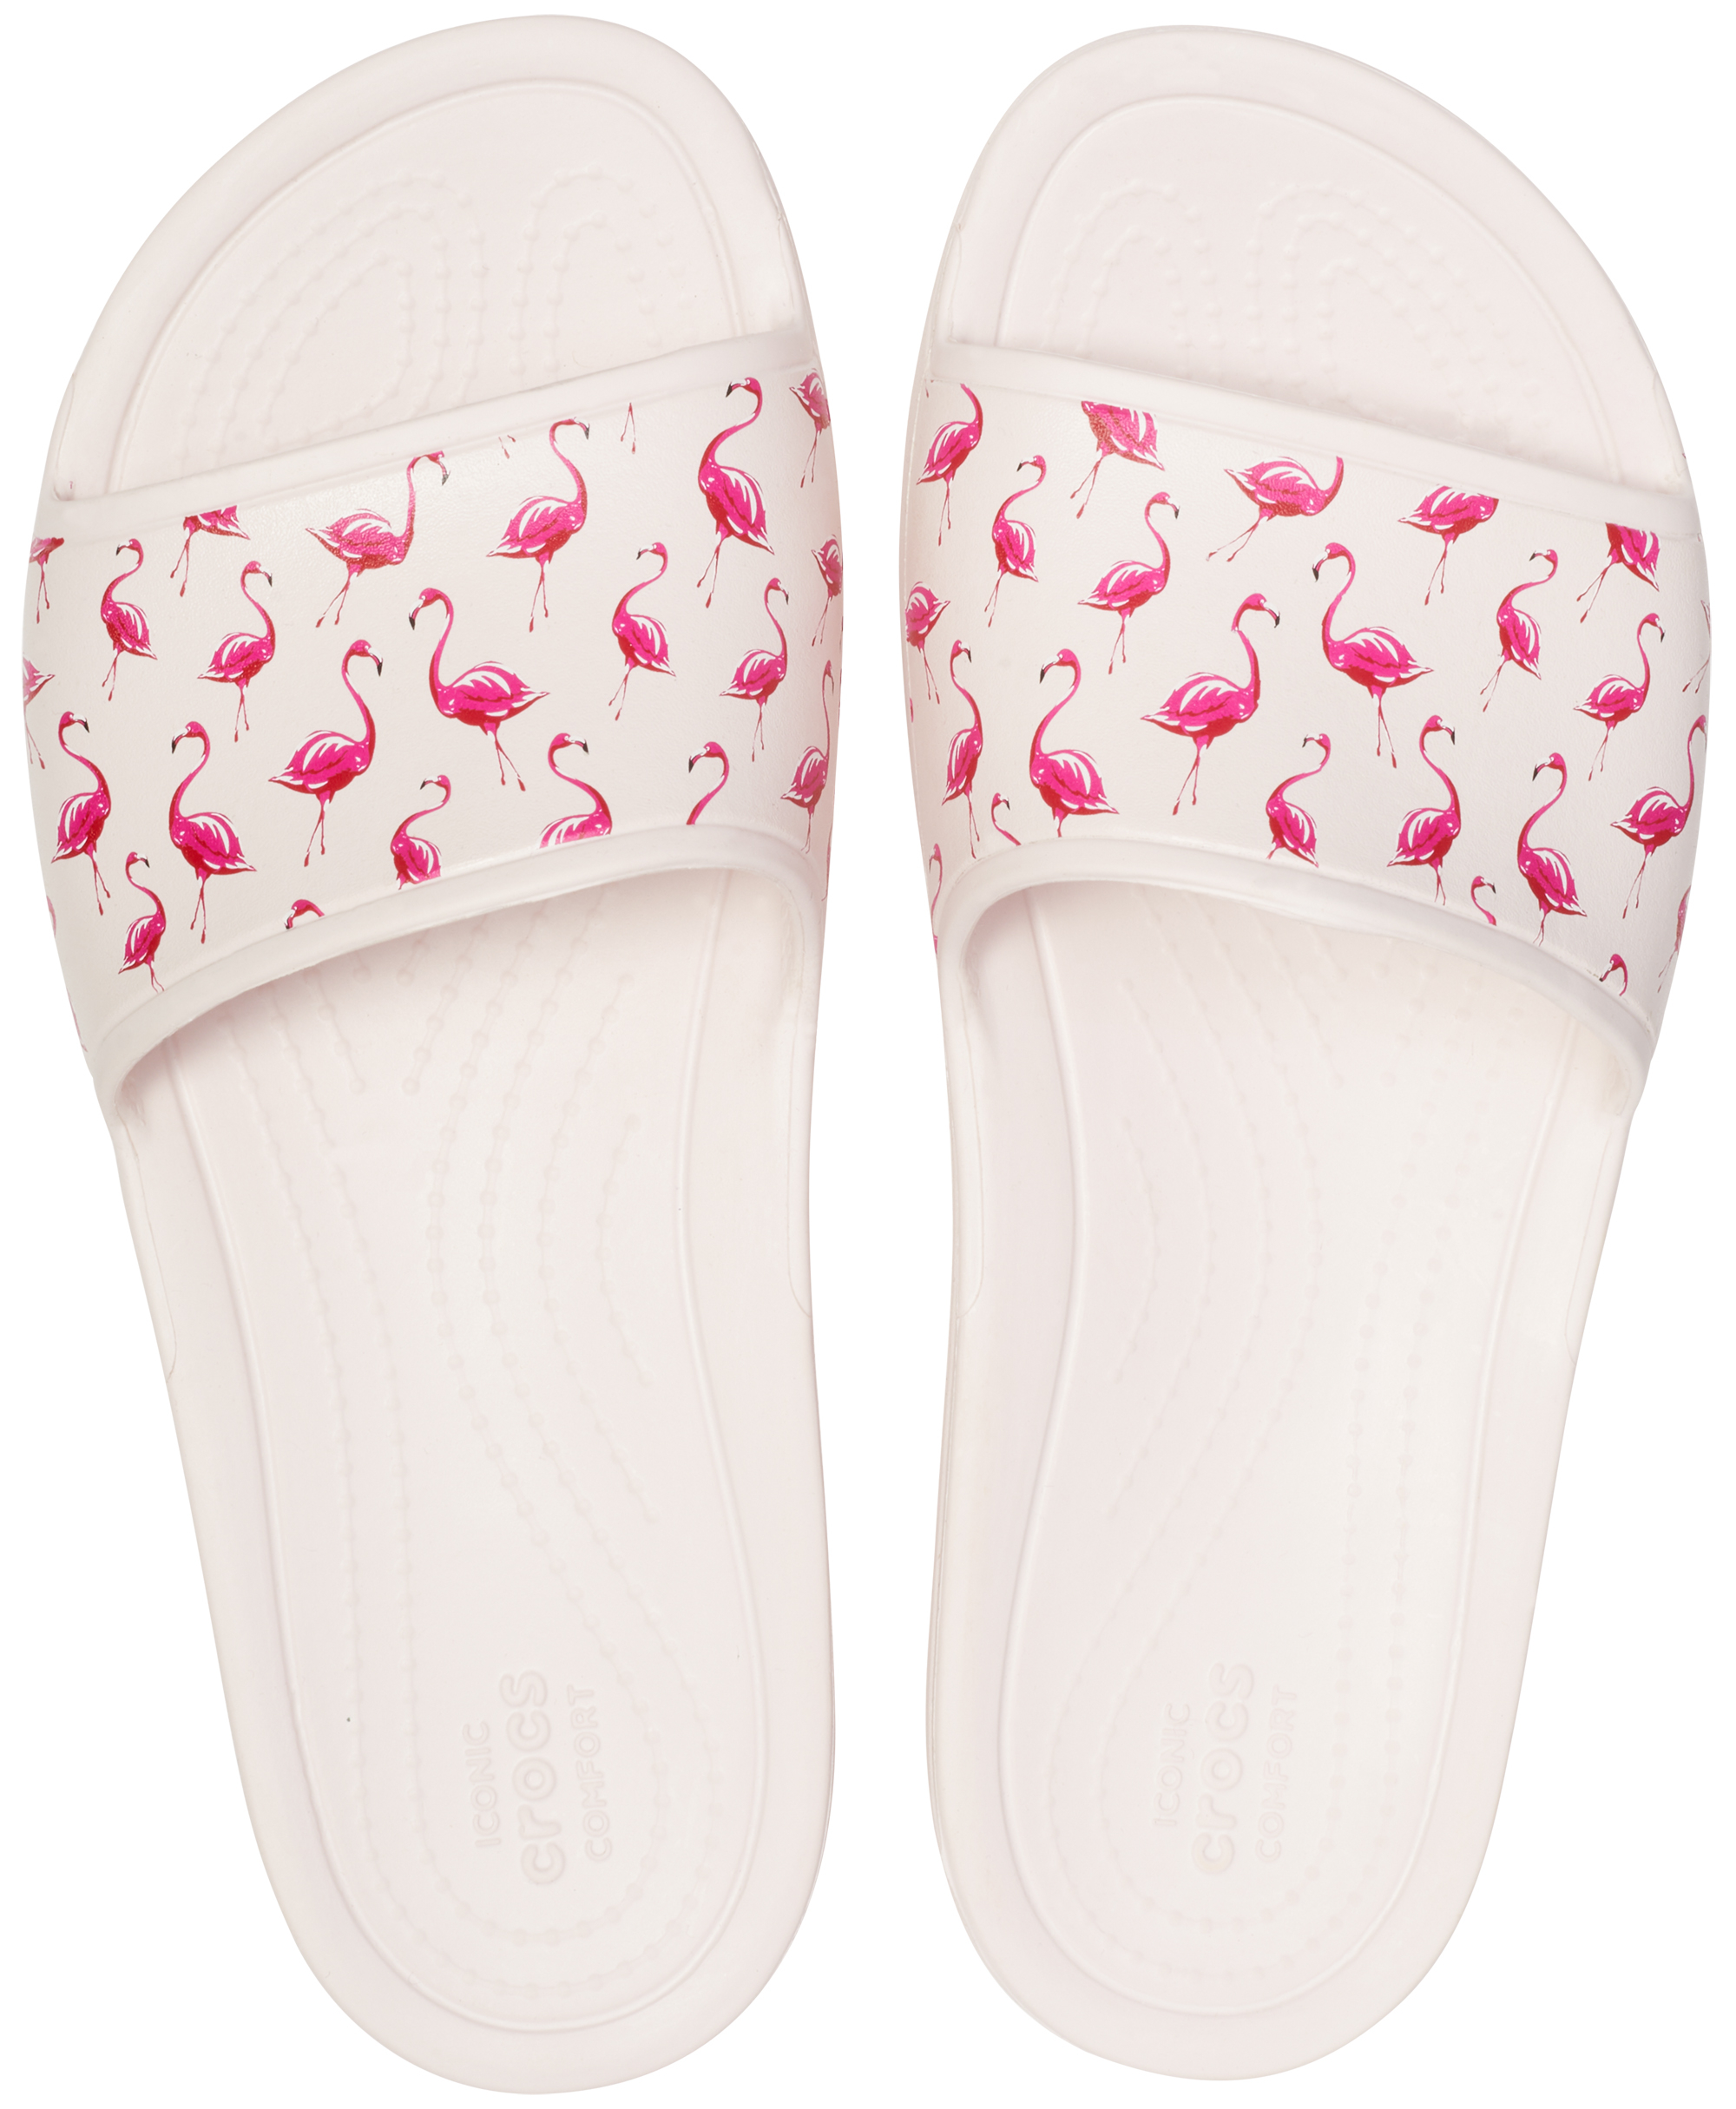 Crocs Women's Sloane SeasonalGrph Sld Slide Sandals - image 4 of 6